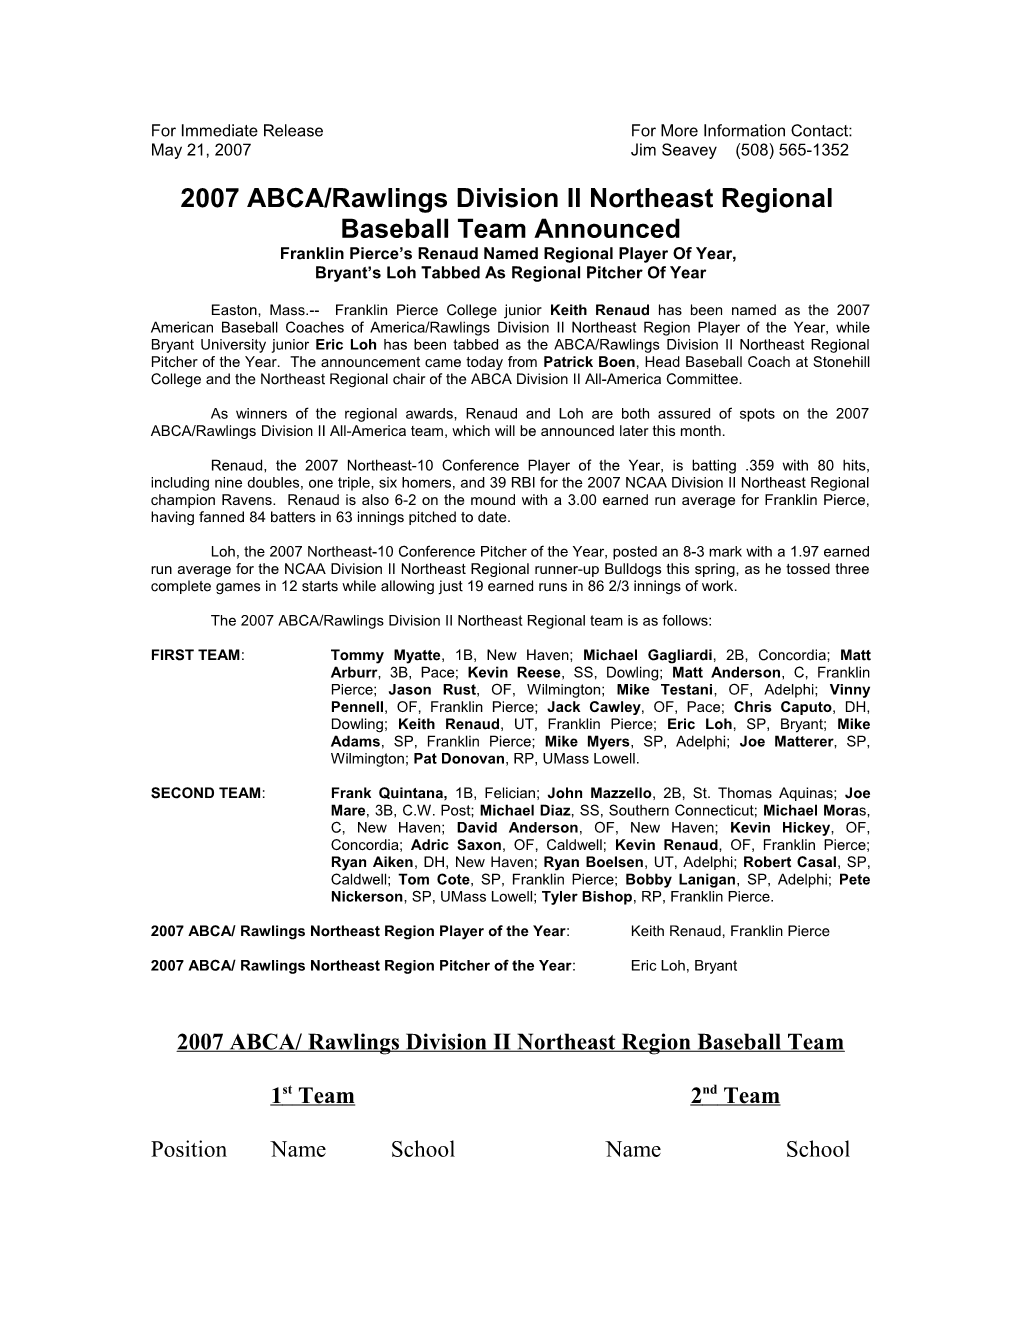 2006 ABCA/ Rawlings Division II Northeast Region Baseball Team